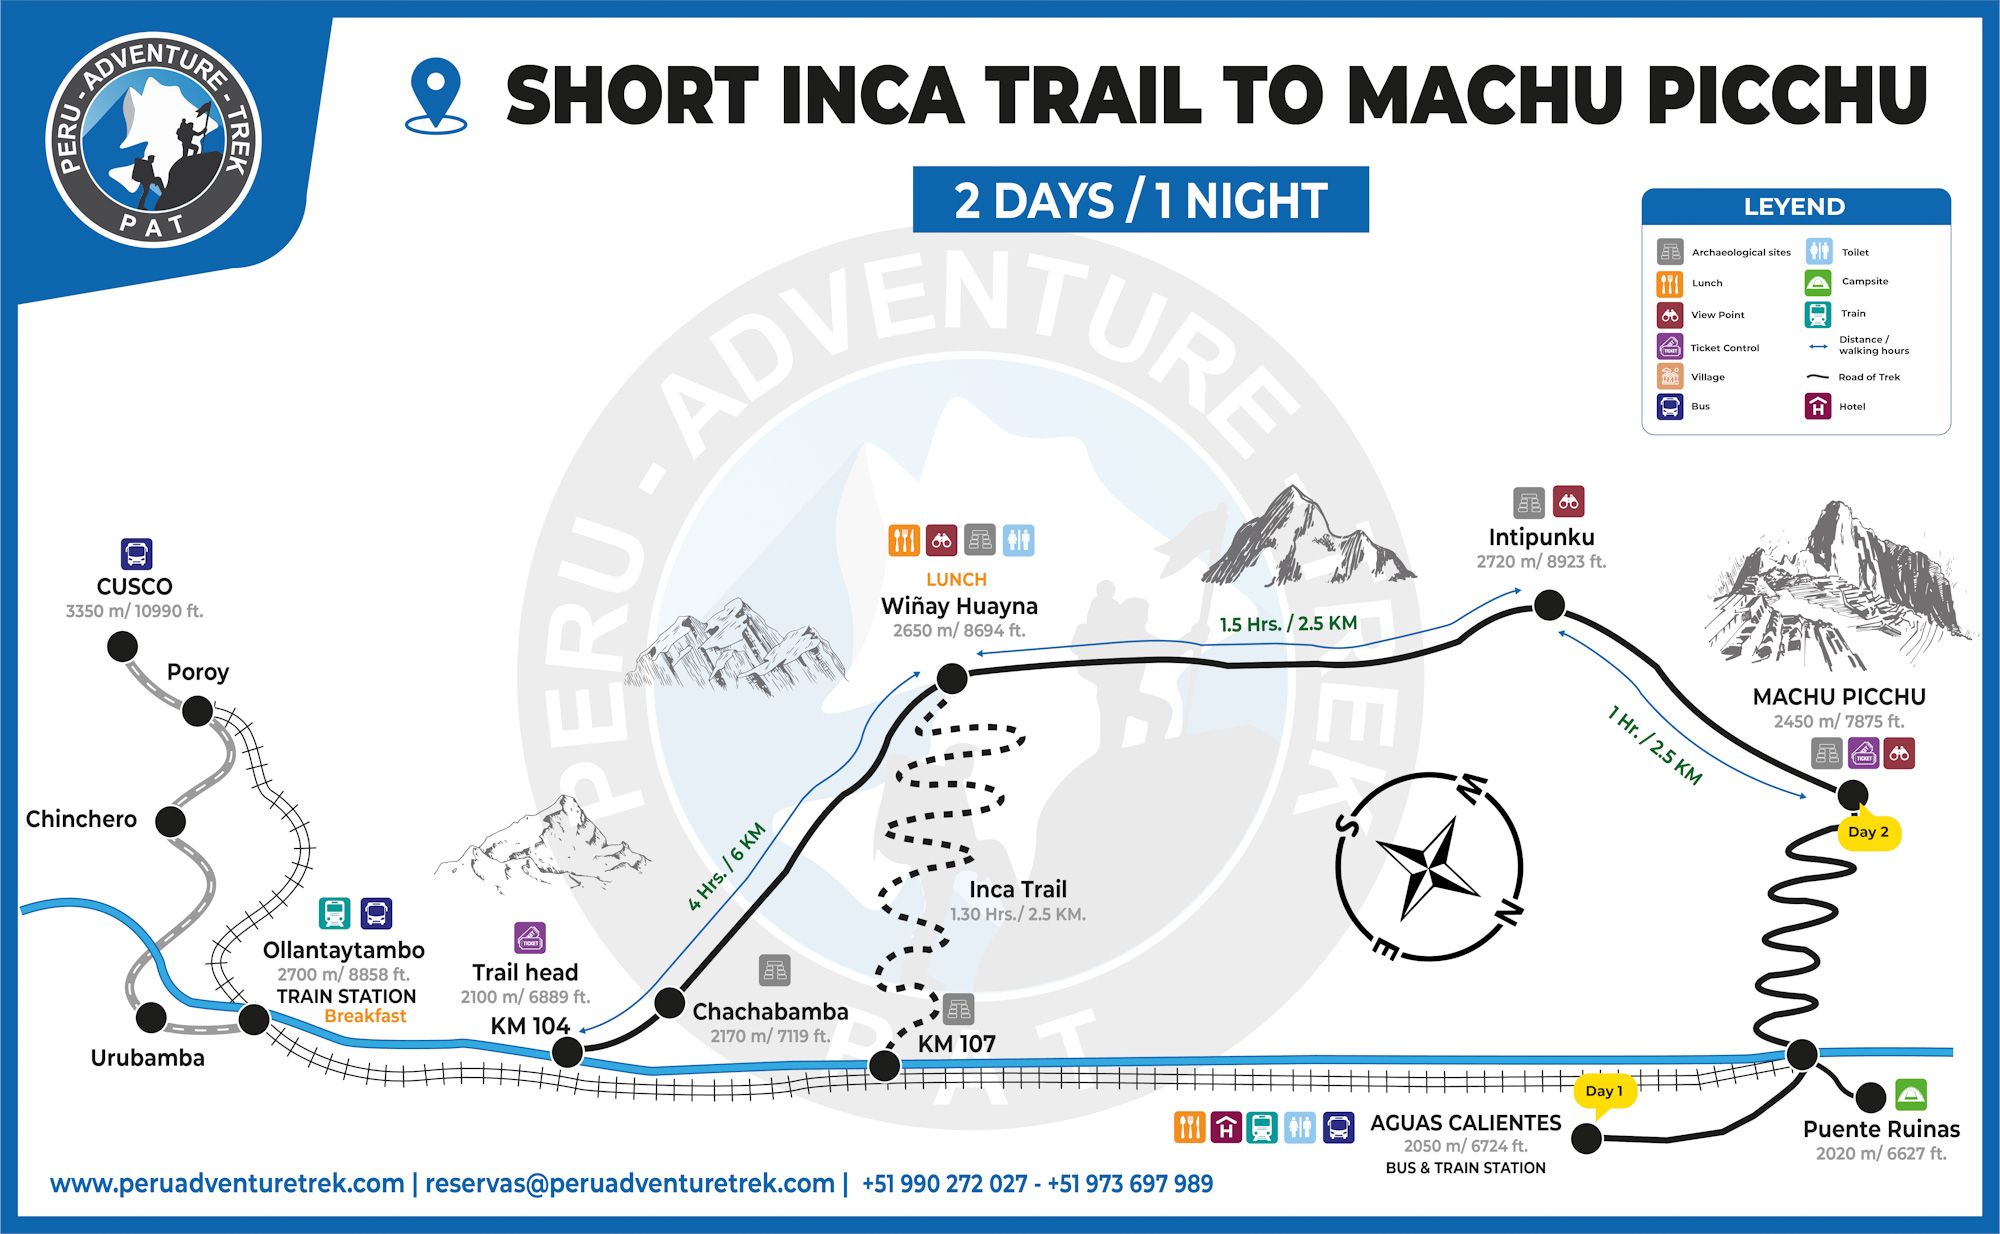 Trilha Inca Curta a Machu Picchu (2 Dias) - Mapa